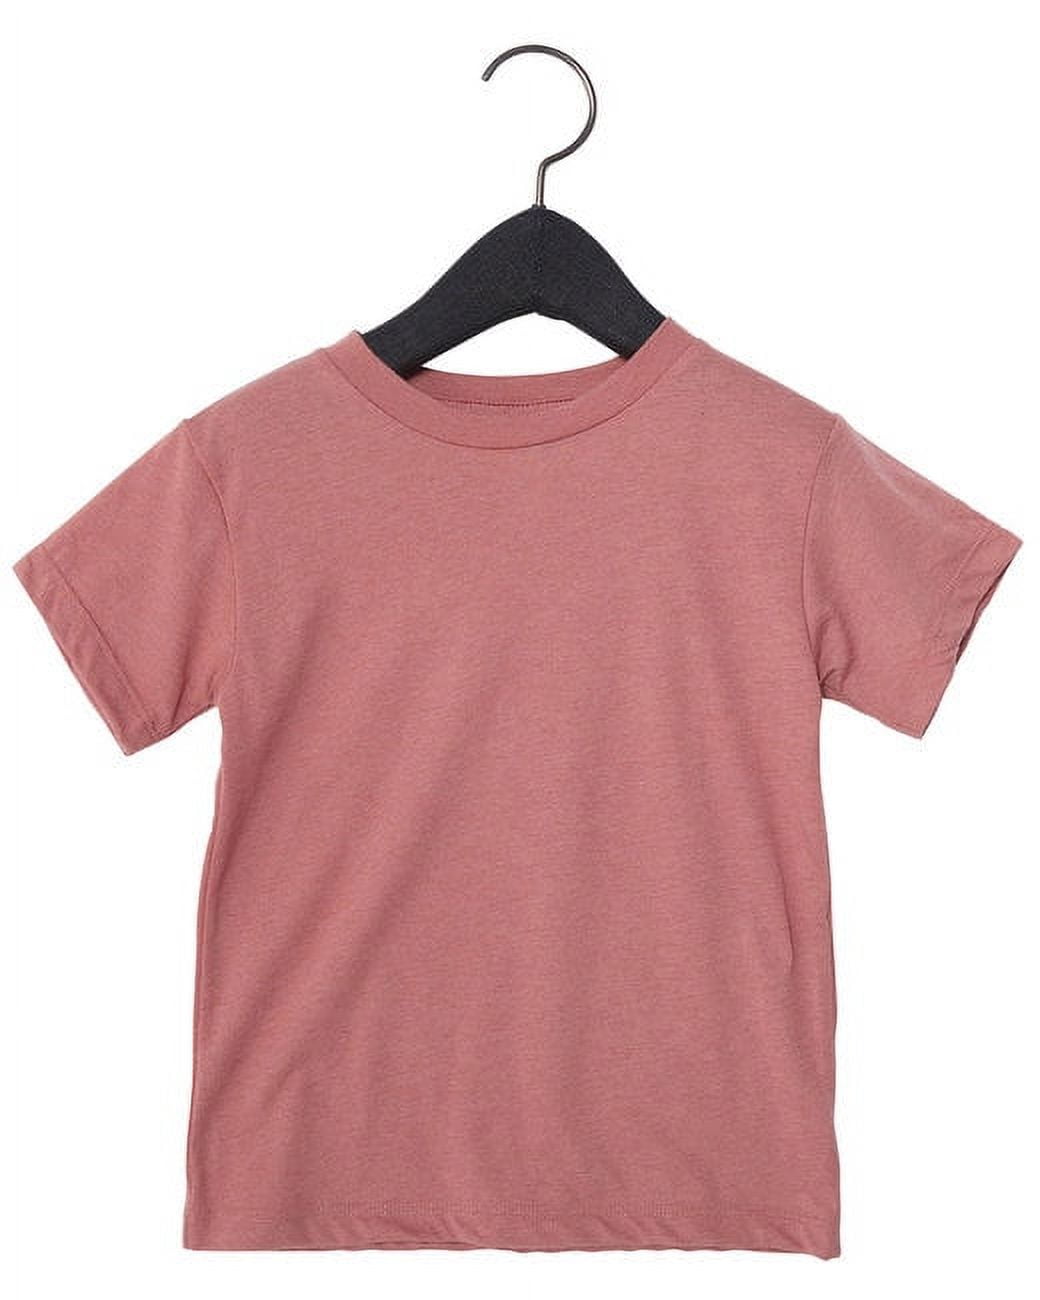 Toddler Jersey Short-Sleeve T-Shirt HEATHER MAUVE 4T